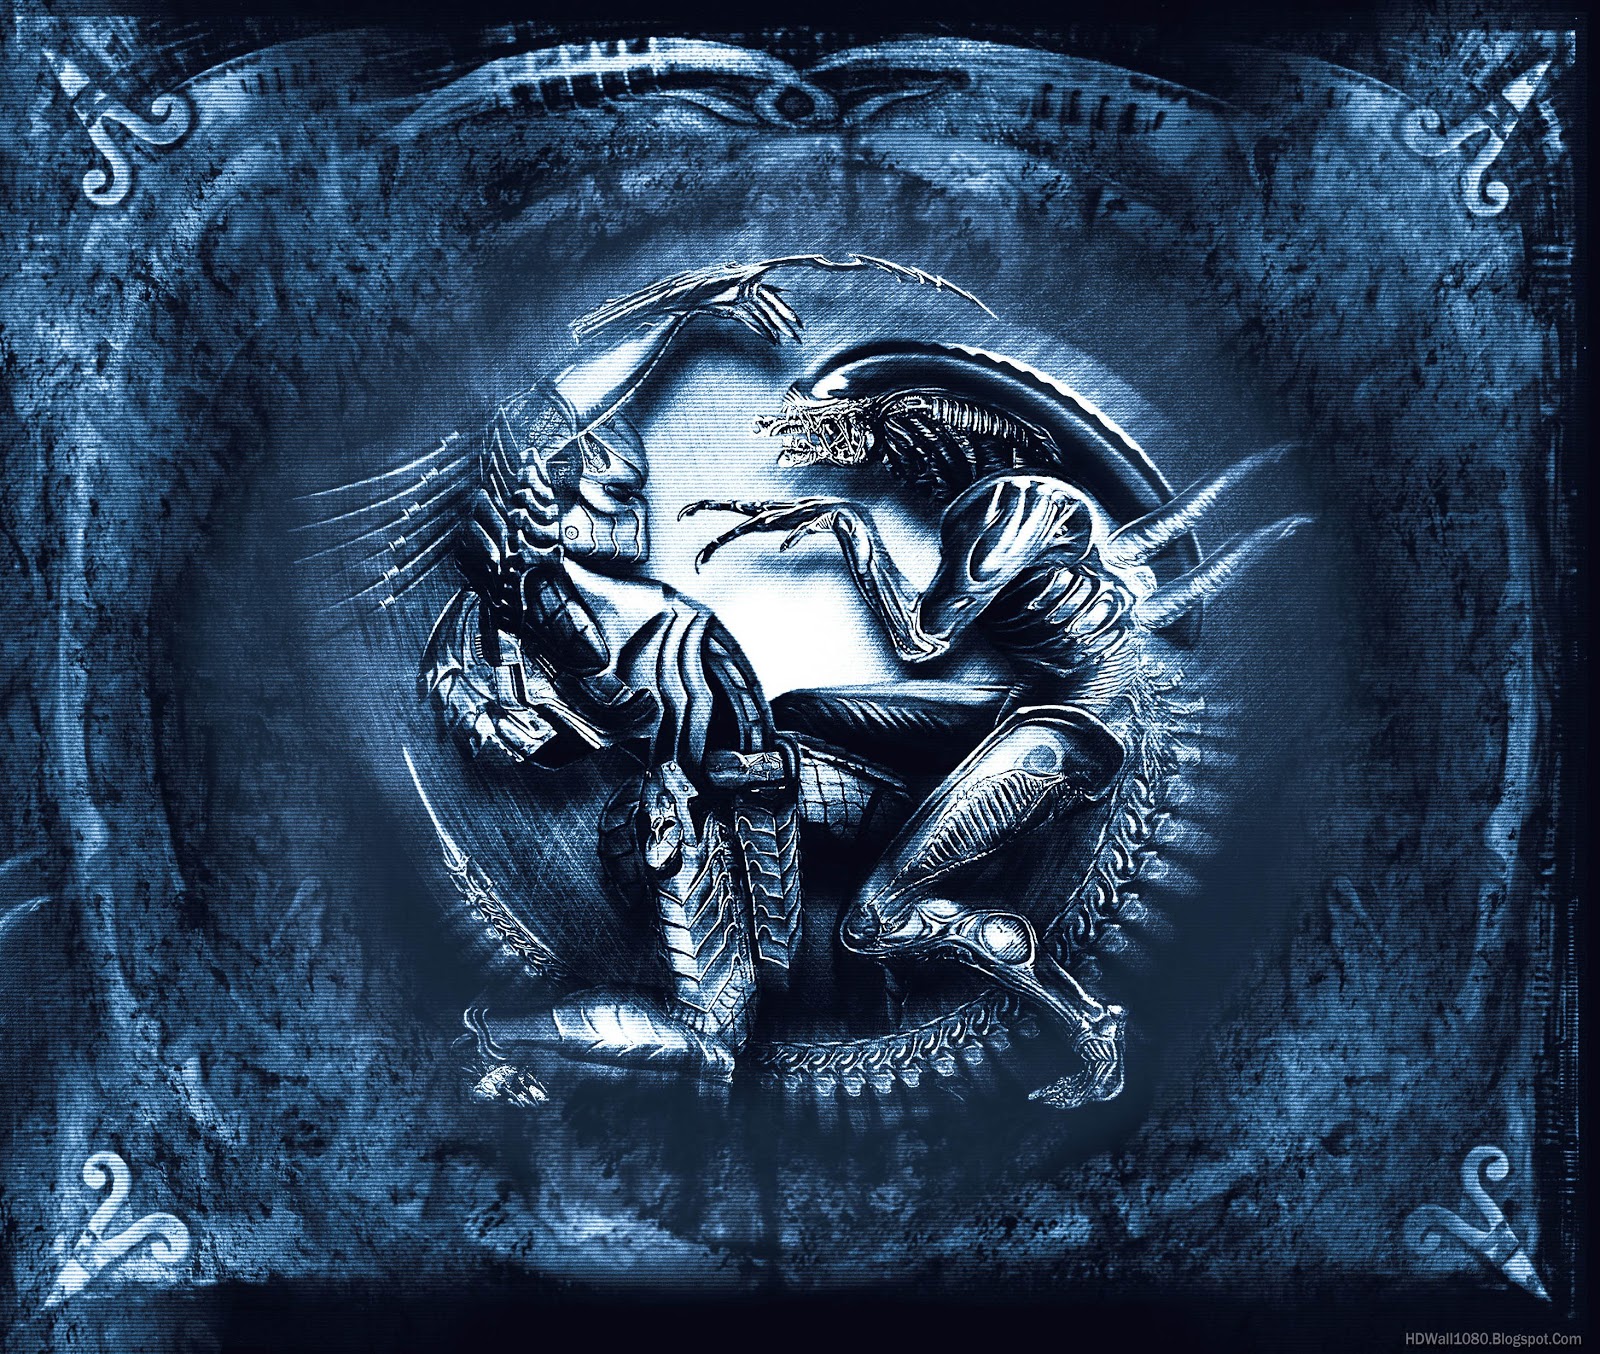 Alien Vs Predator Wallpaper Image Amp Pictures Becuo